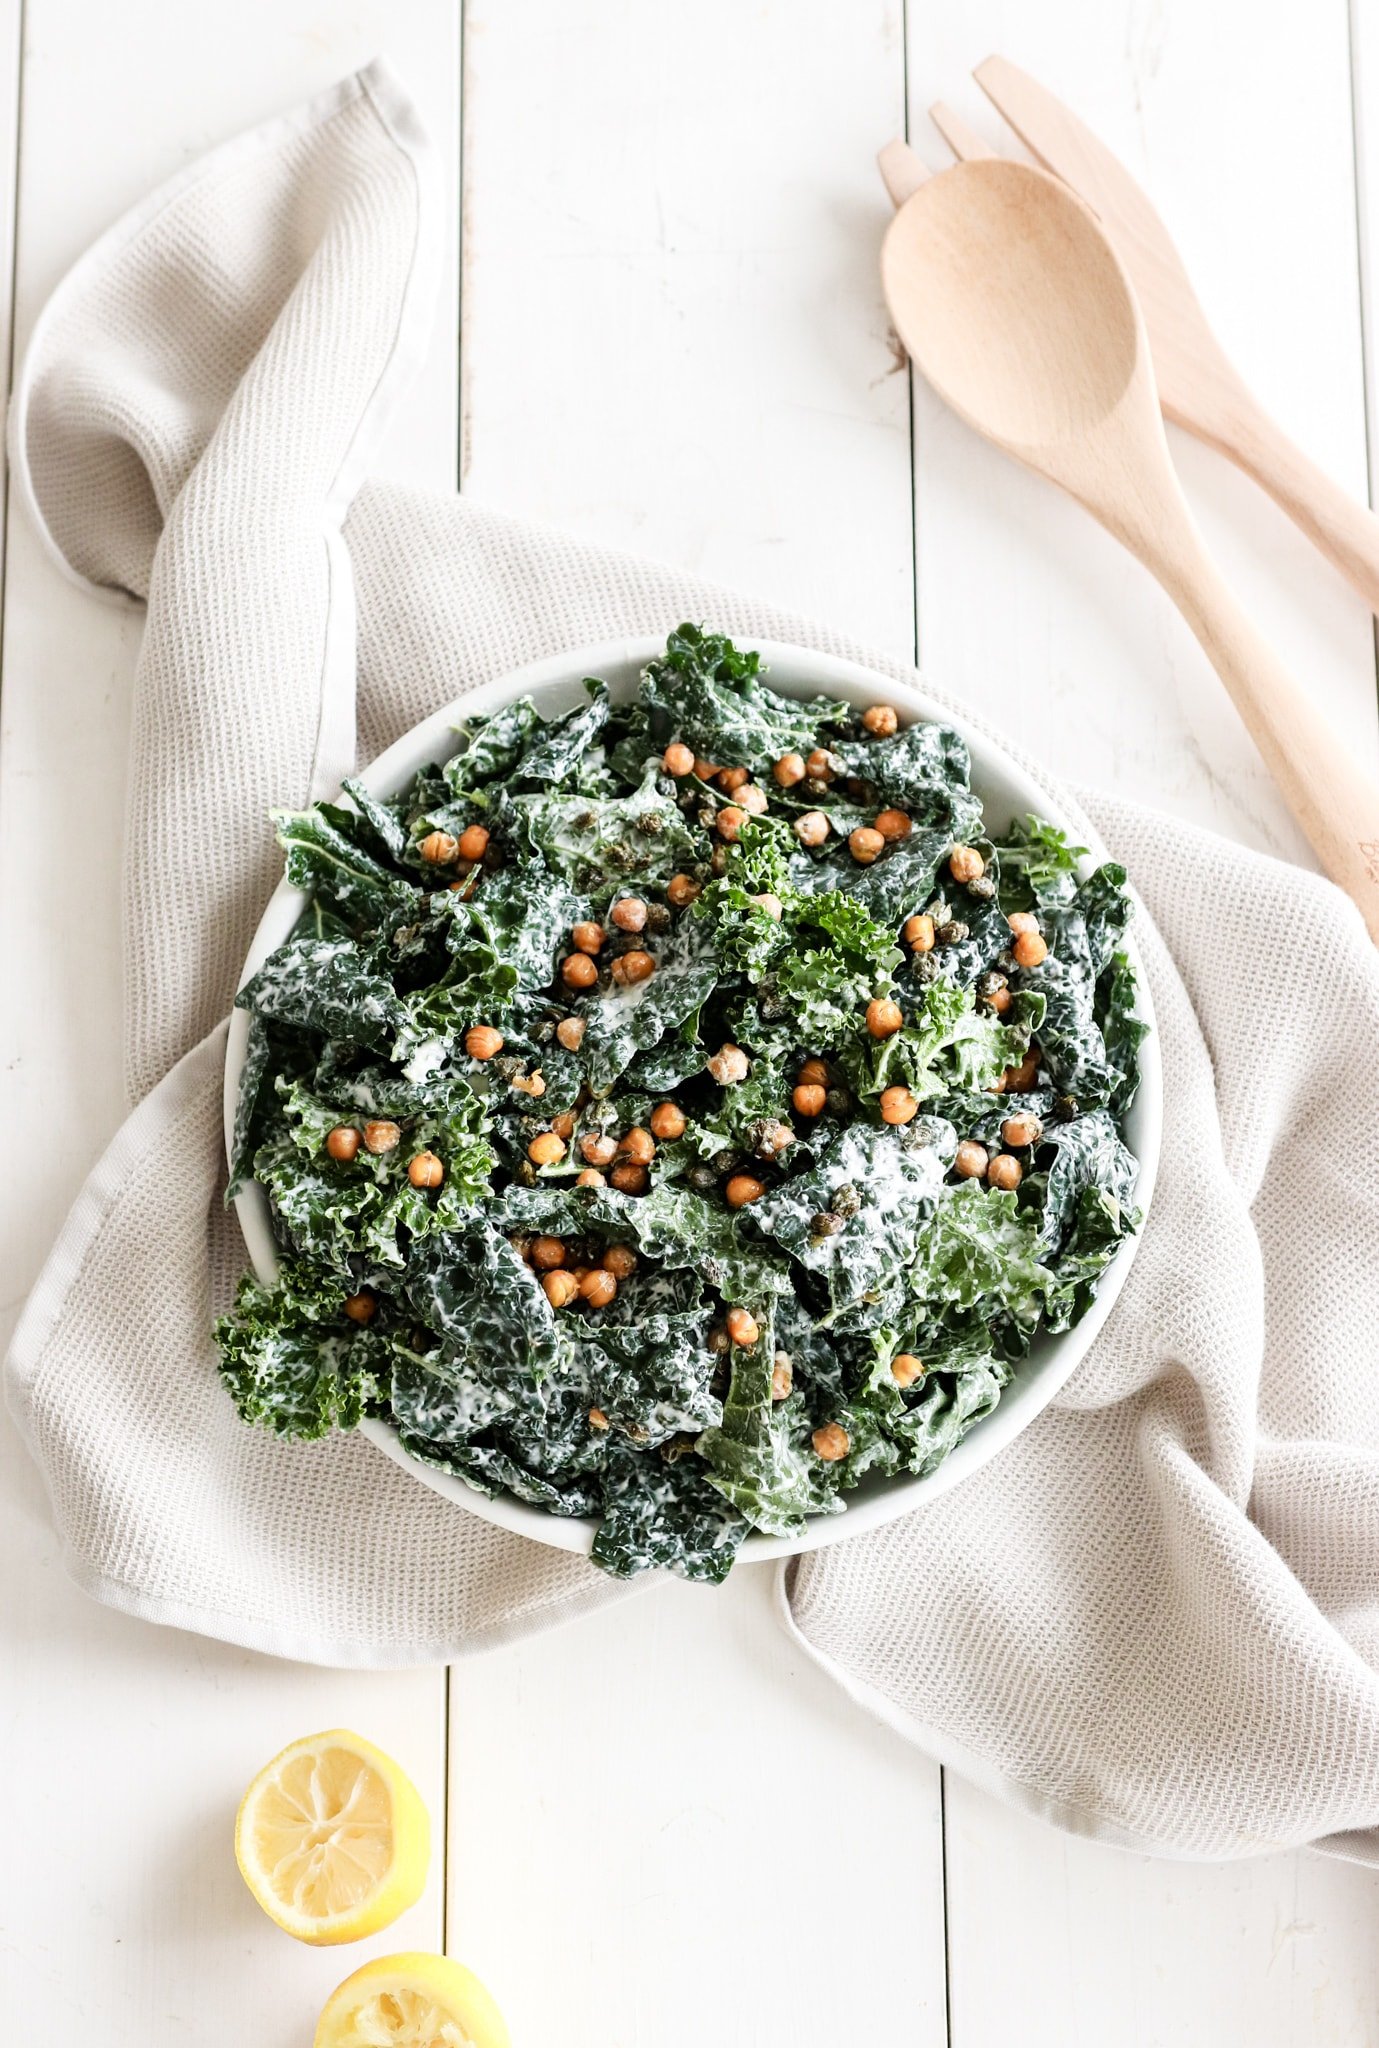 https://www.lindsaypleskot.com/wp-content/uploads/2022/06/Kale-Caesar-Salad-by-Lindsay-Pleskot-Dietitian-1.jpg